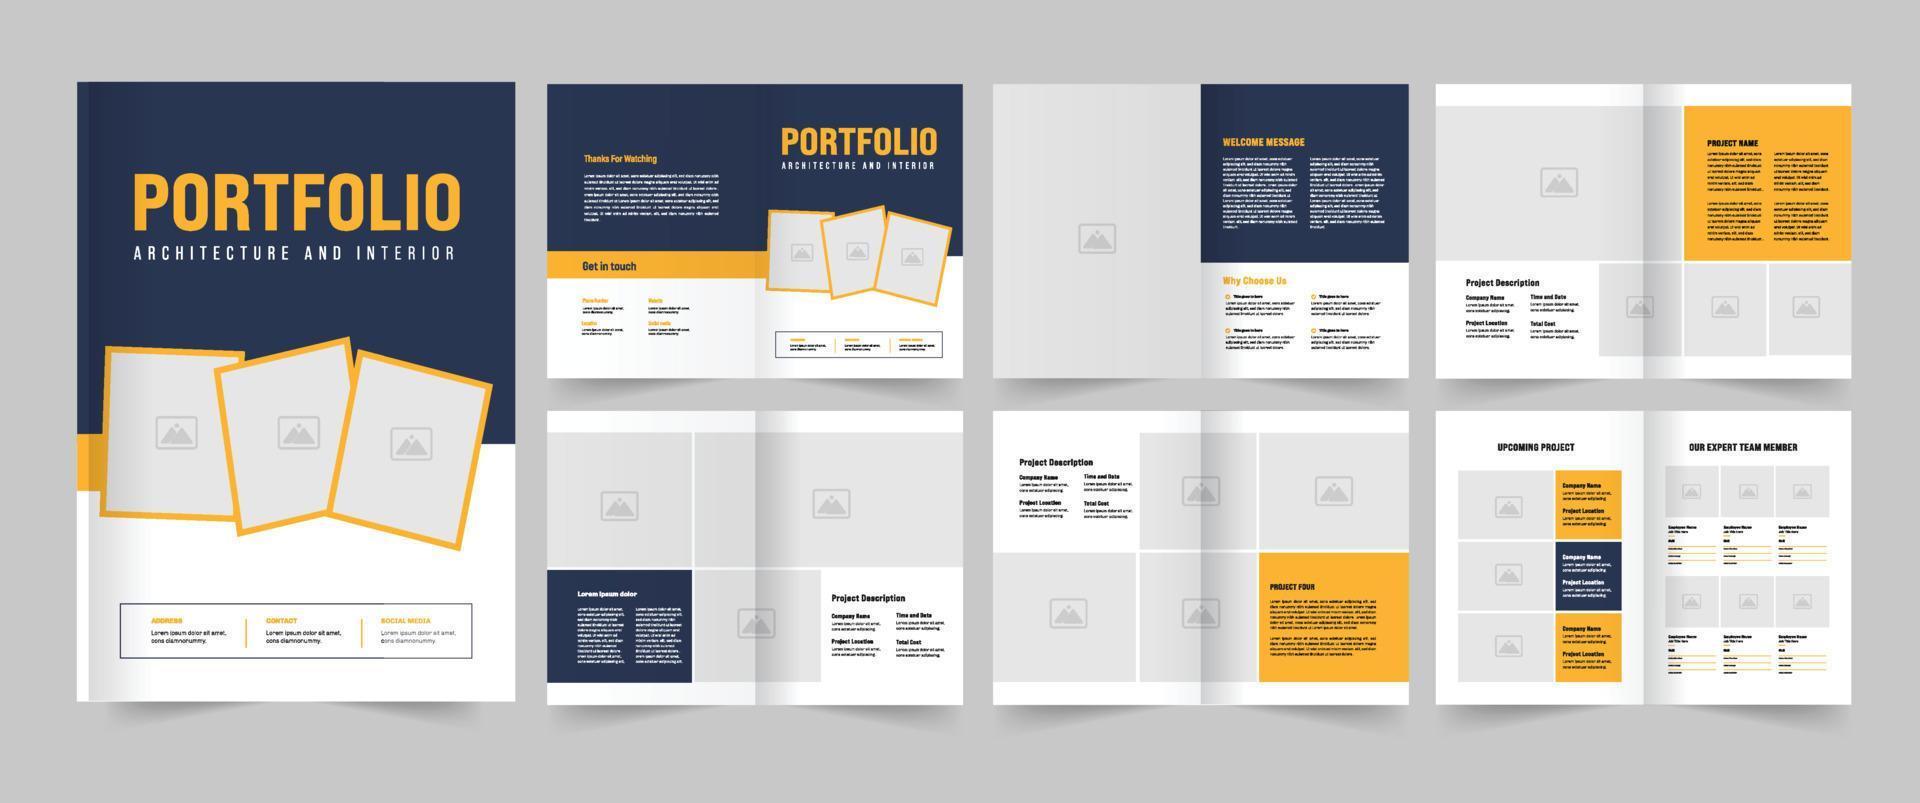 Portfolio Design and and portfolio with Black and White vector